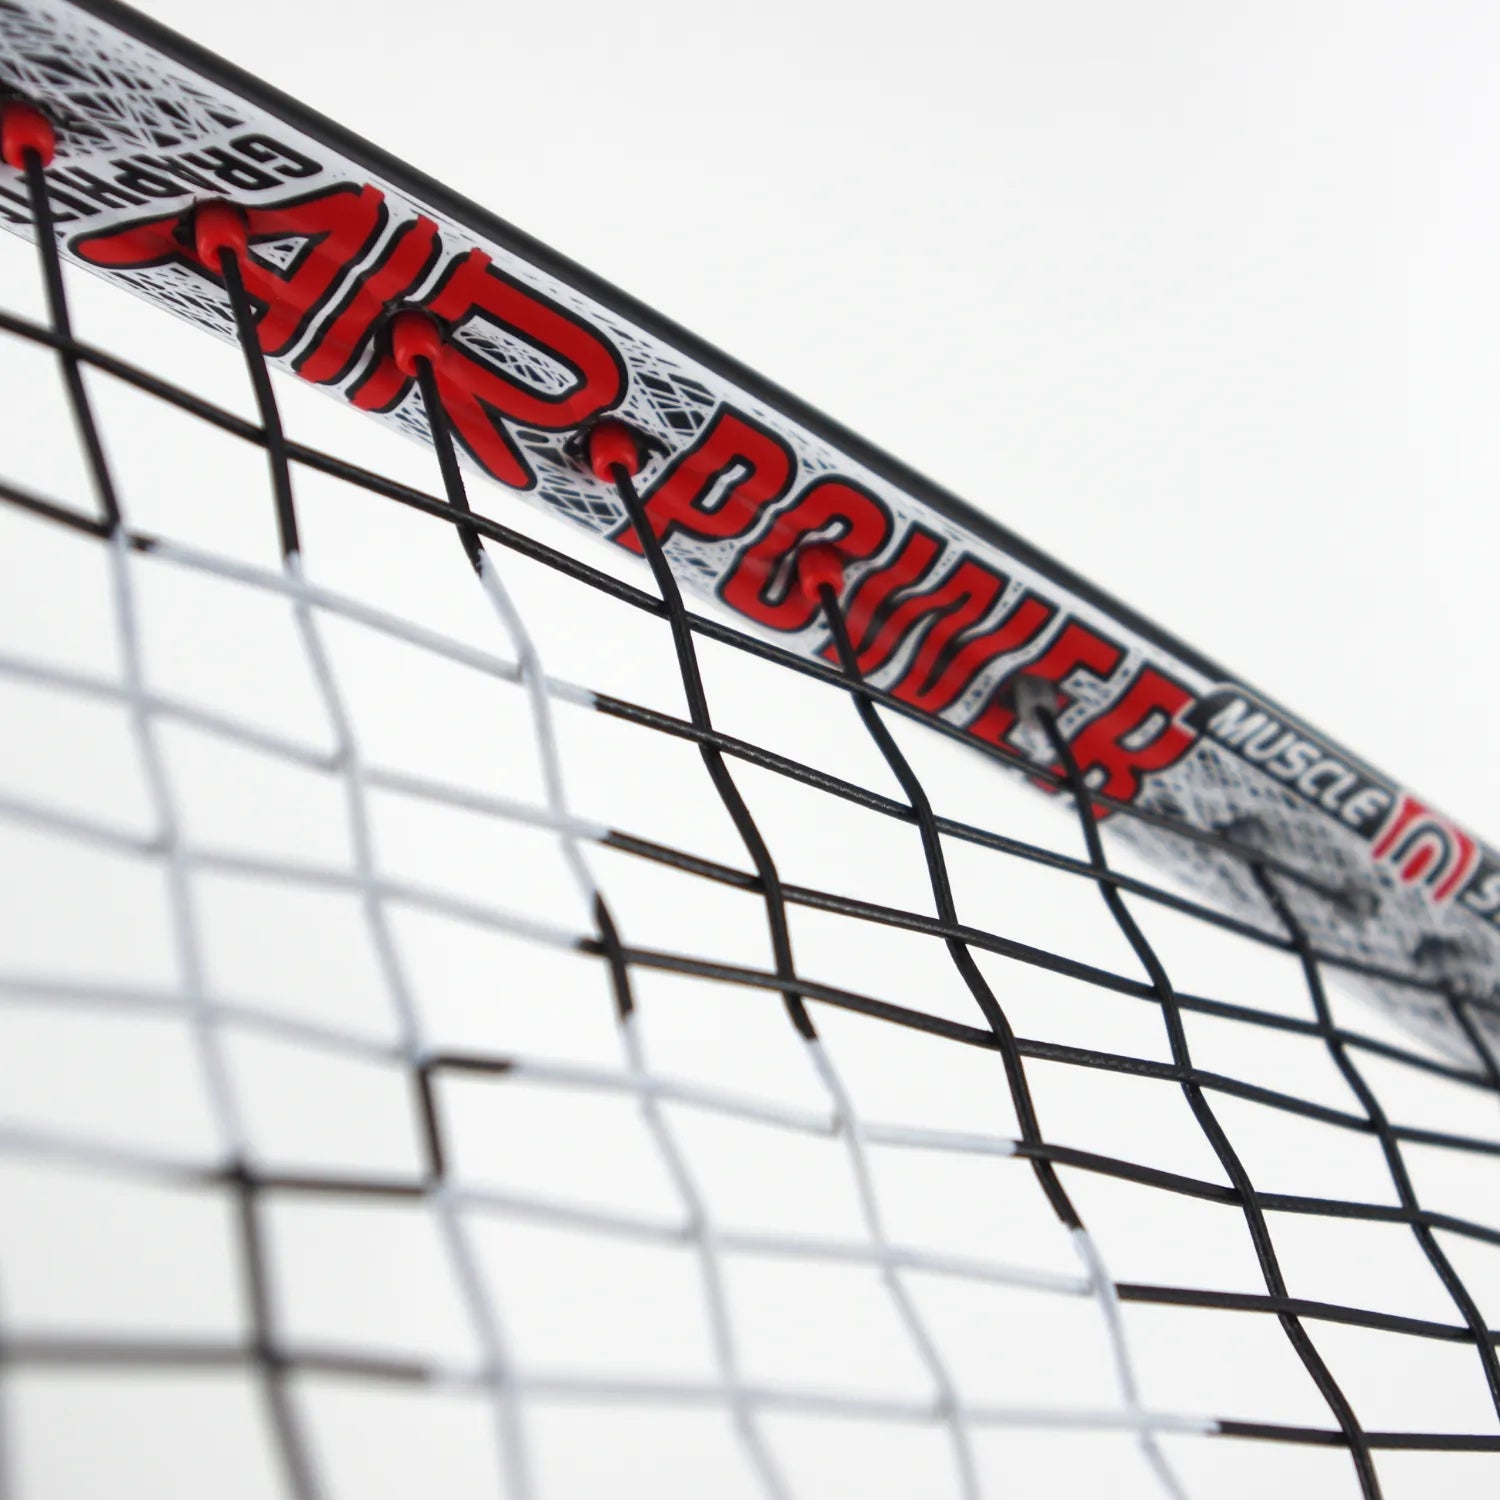 Raquette de squash Karakal MTI 120 - Sport time